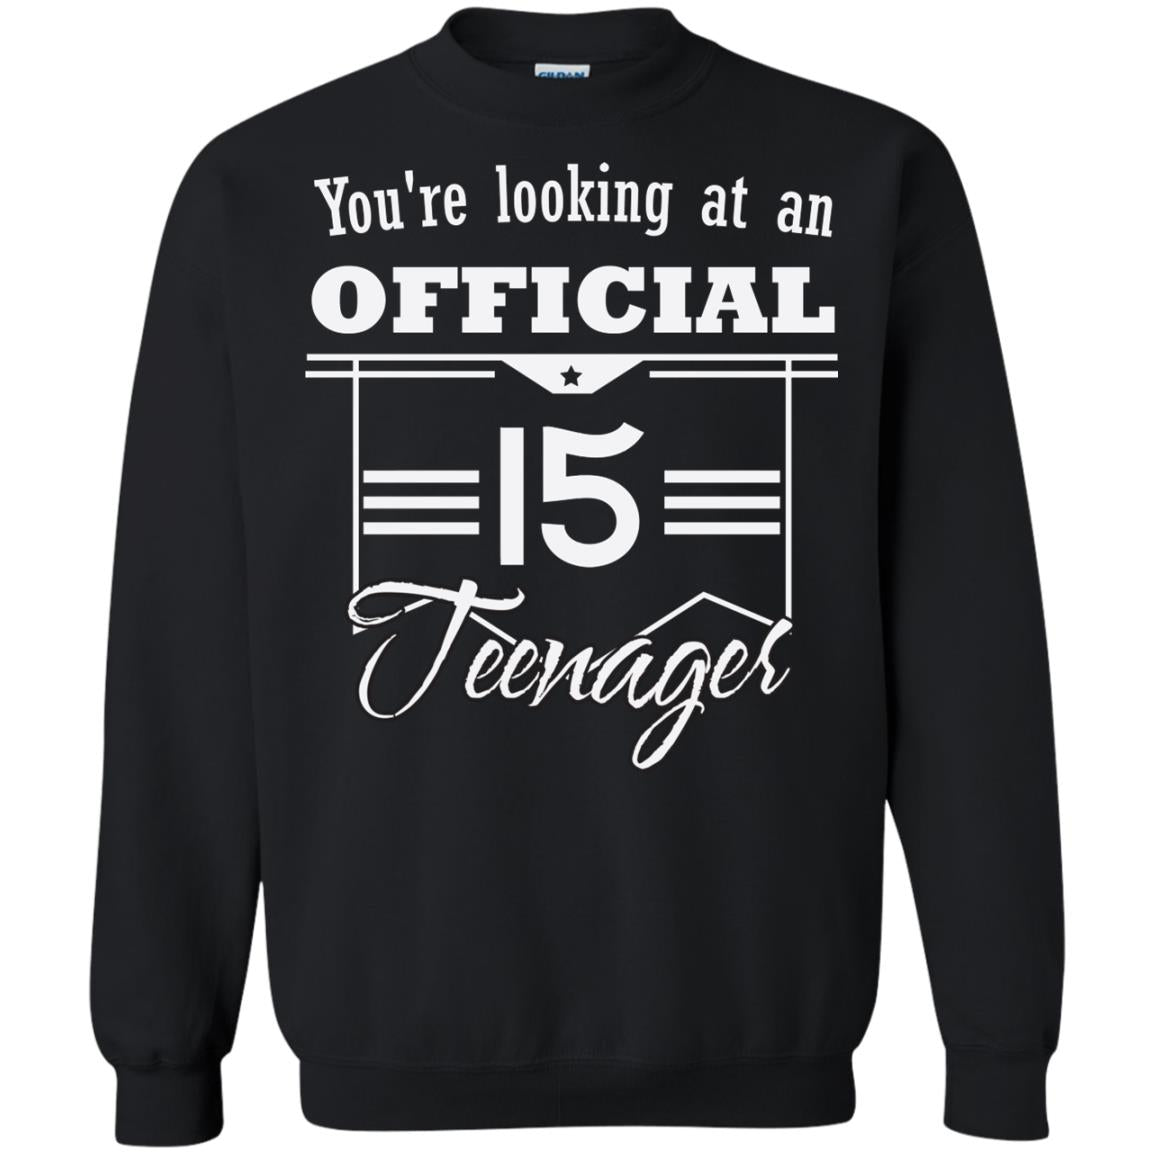 You're Looking At An Official 15 Teenager 15th Birthday ShirtG180 Gildan Crewneck Pullover Sweatshirt 8 oz.